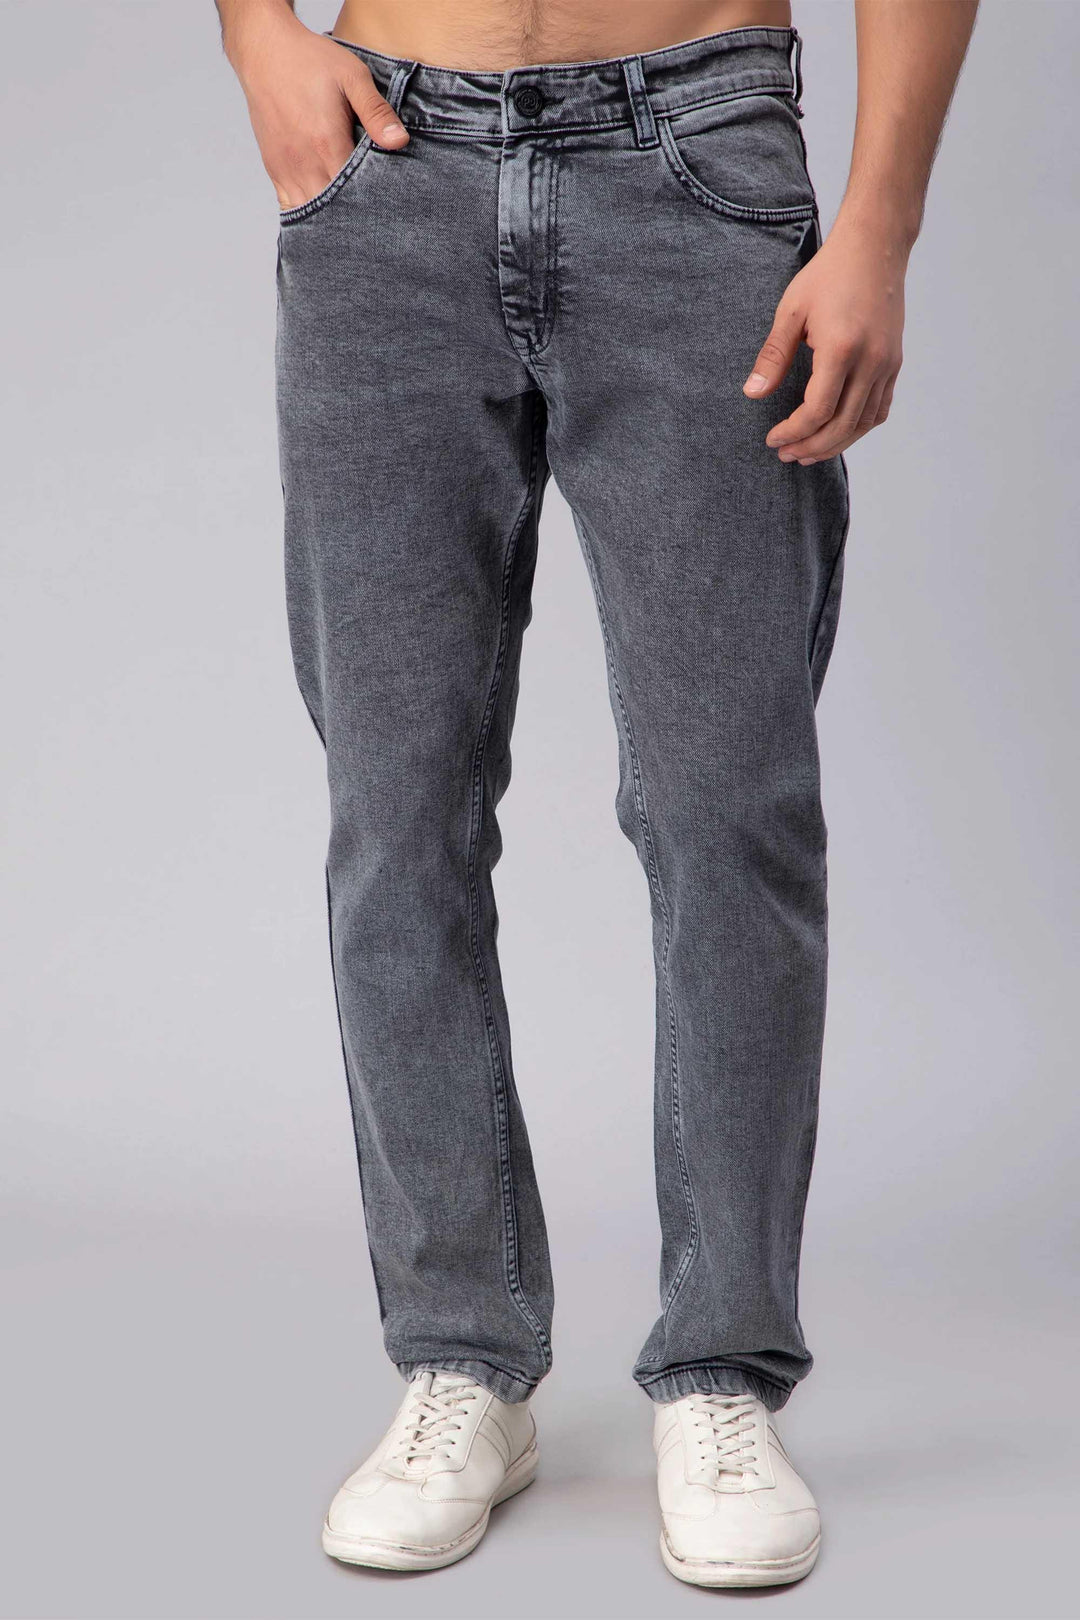 Ankle Fit Shady Grey Denim Jeans For Men - Peplos Jeans 